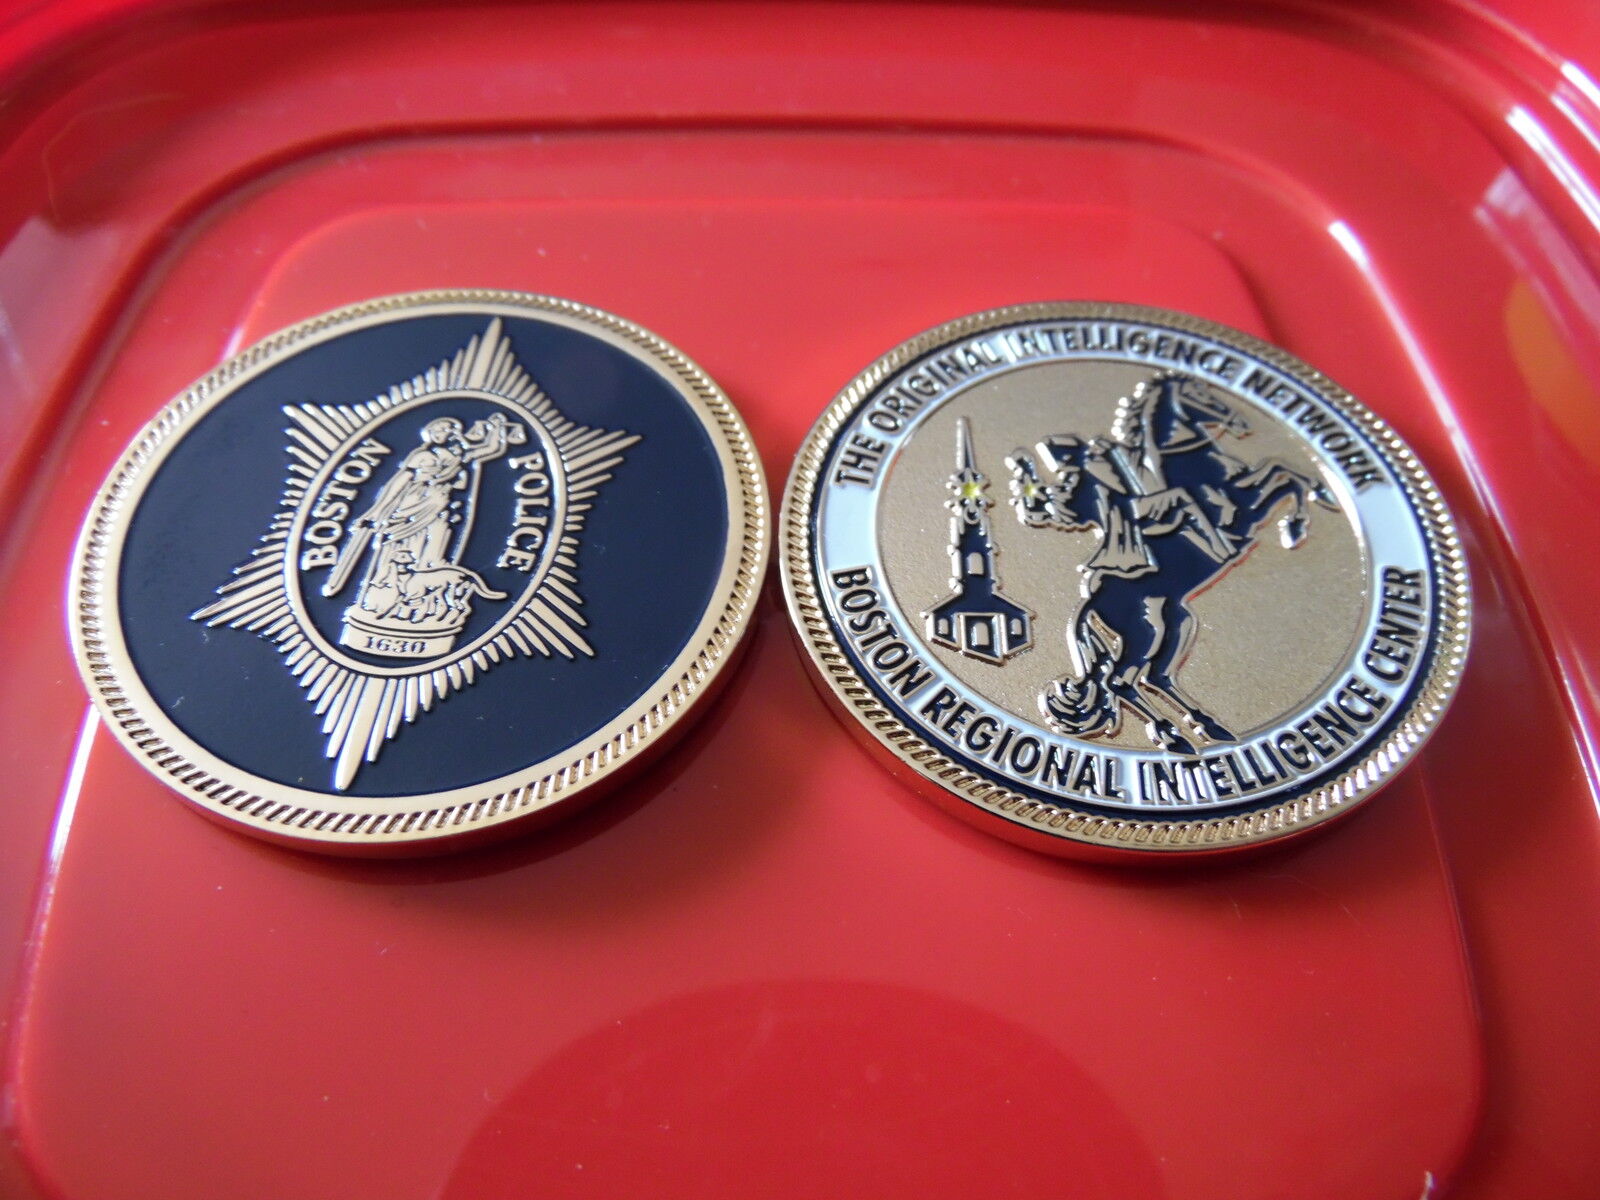 Boston Police Regional Intelligence Center Challenge Coin